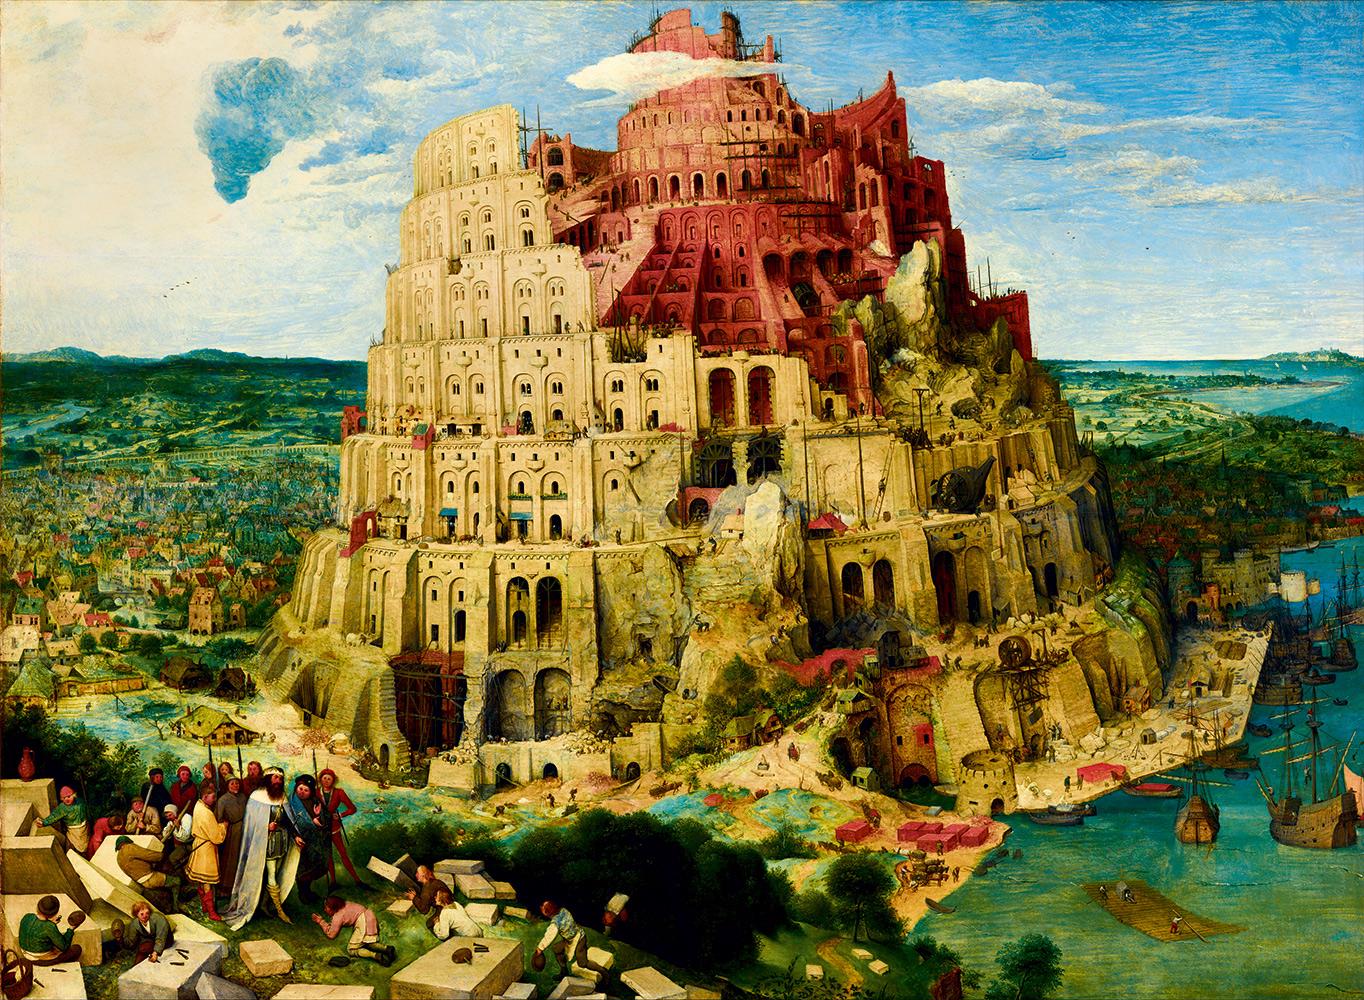 Brueghel: The Tower of Babel, 1563